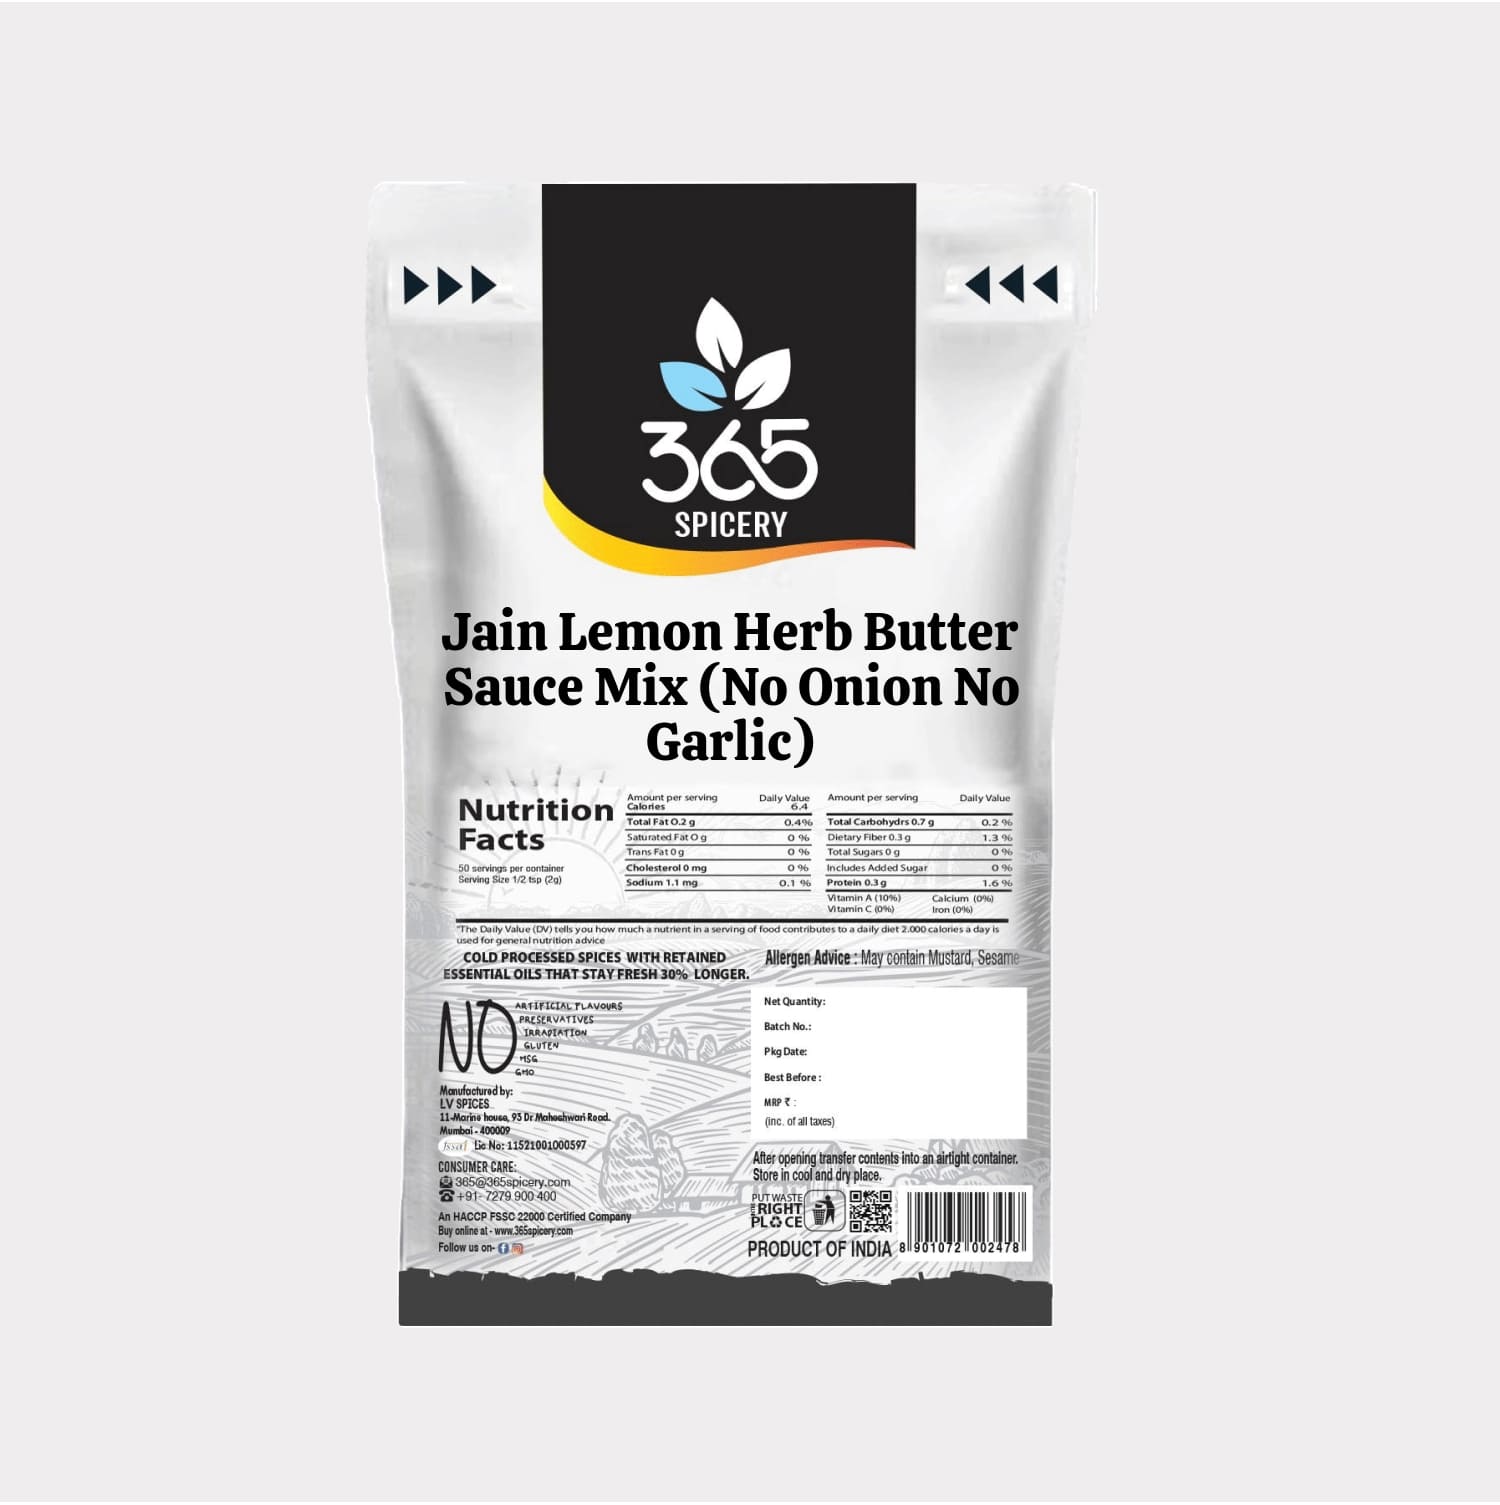 Jain Lemon Herb Butter Sauce Mix (No Onion No Garlic)